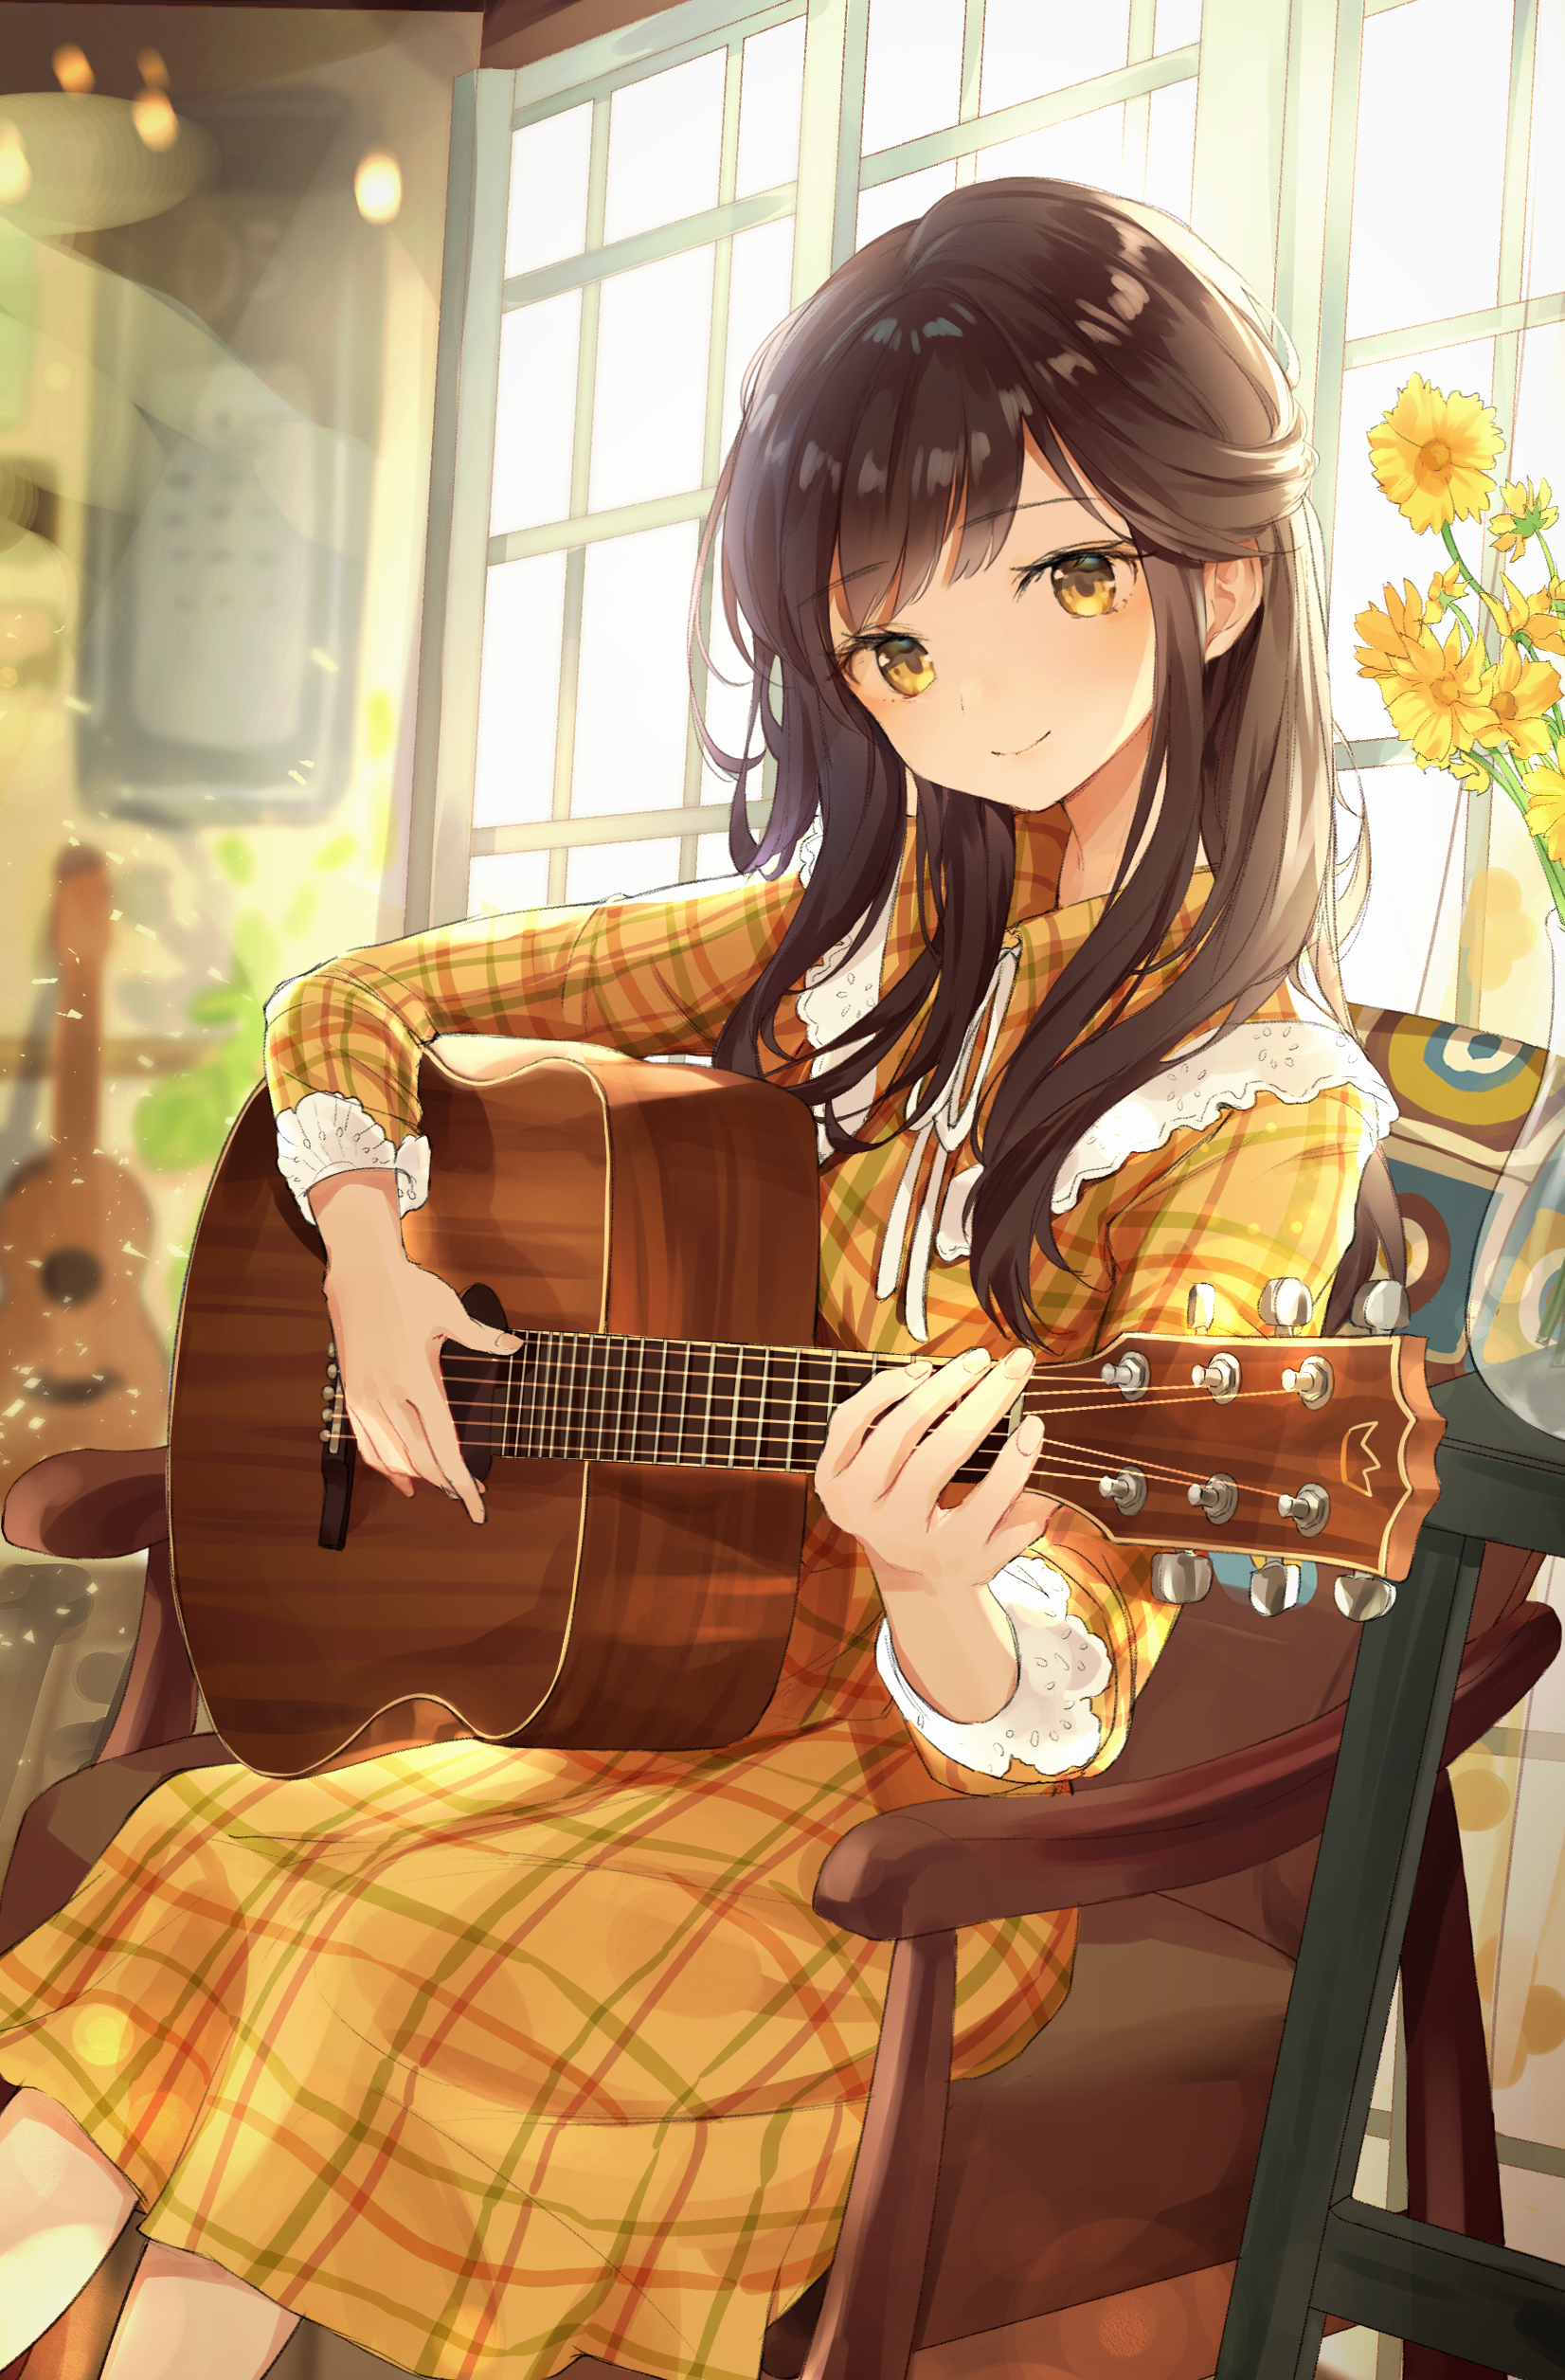 Anime 1652x2512 anime anime girls portrait display guitar long hair flowers yellow eyes brunette dress artwork Nabi